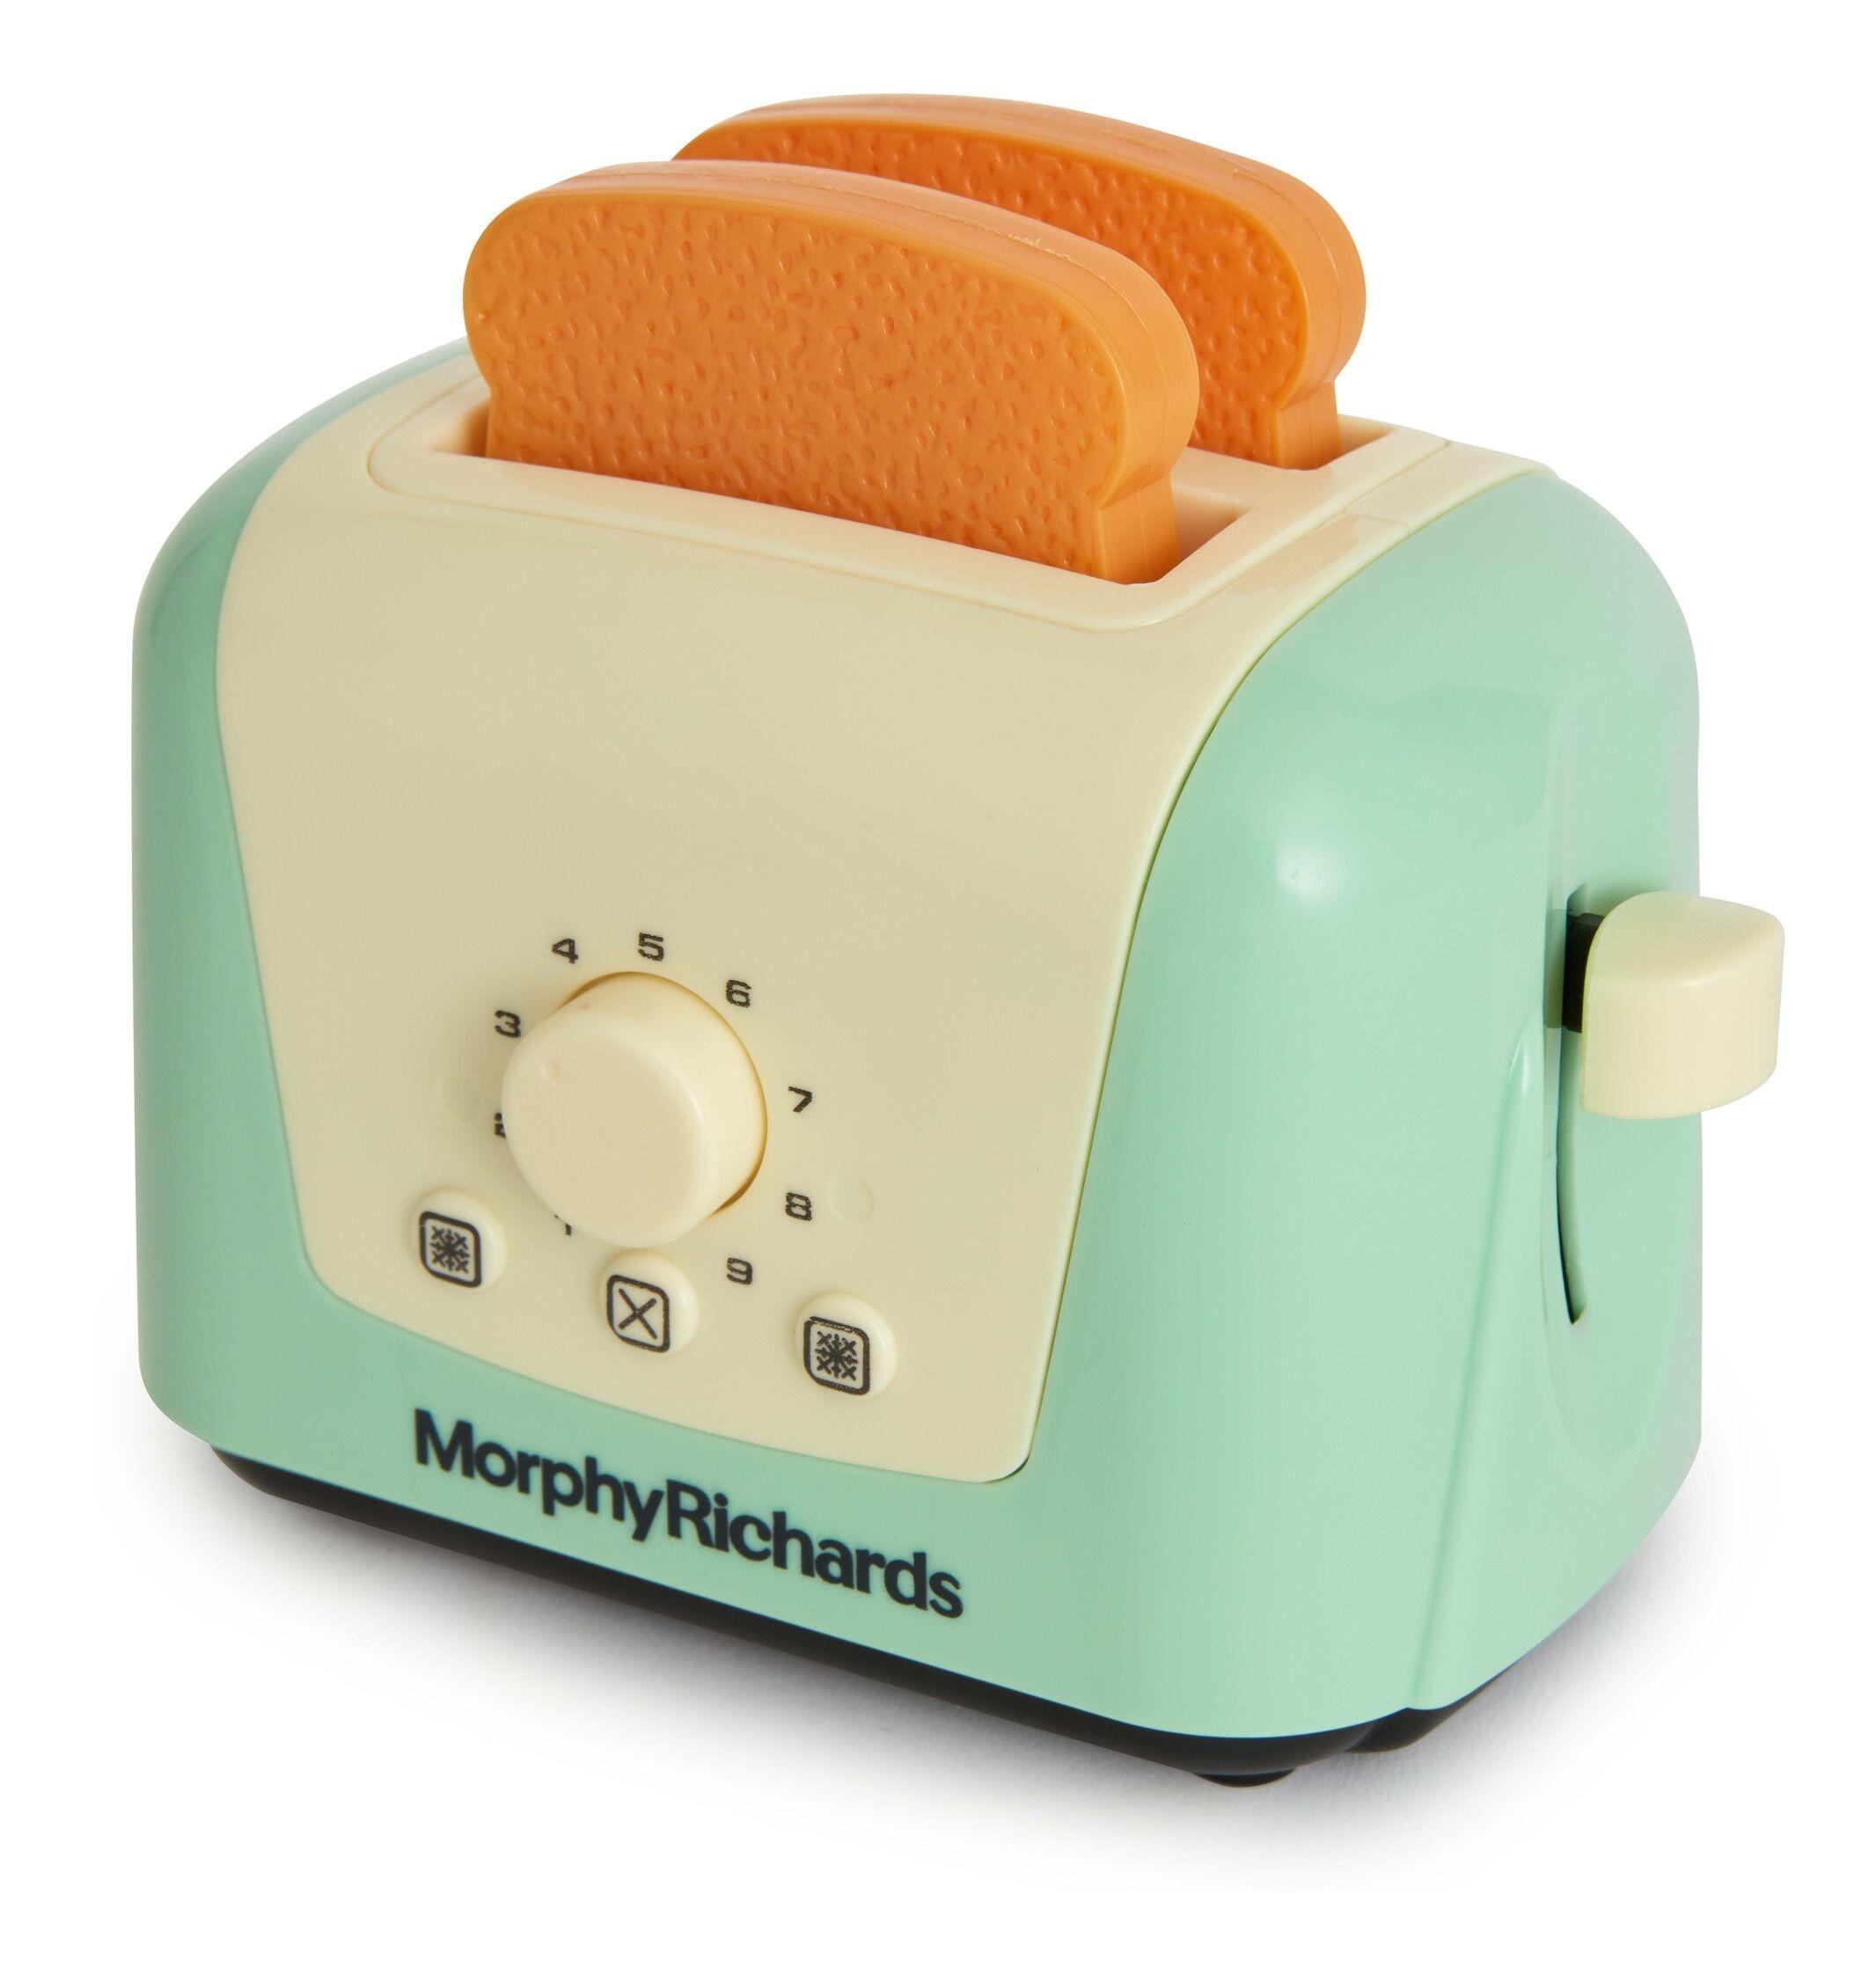 Morphy Richards Children's Toaster Playset